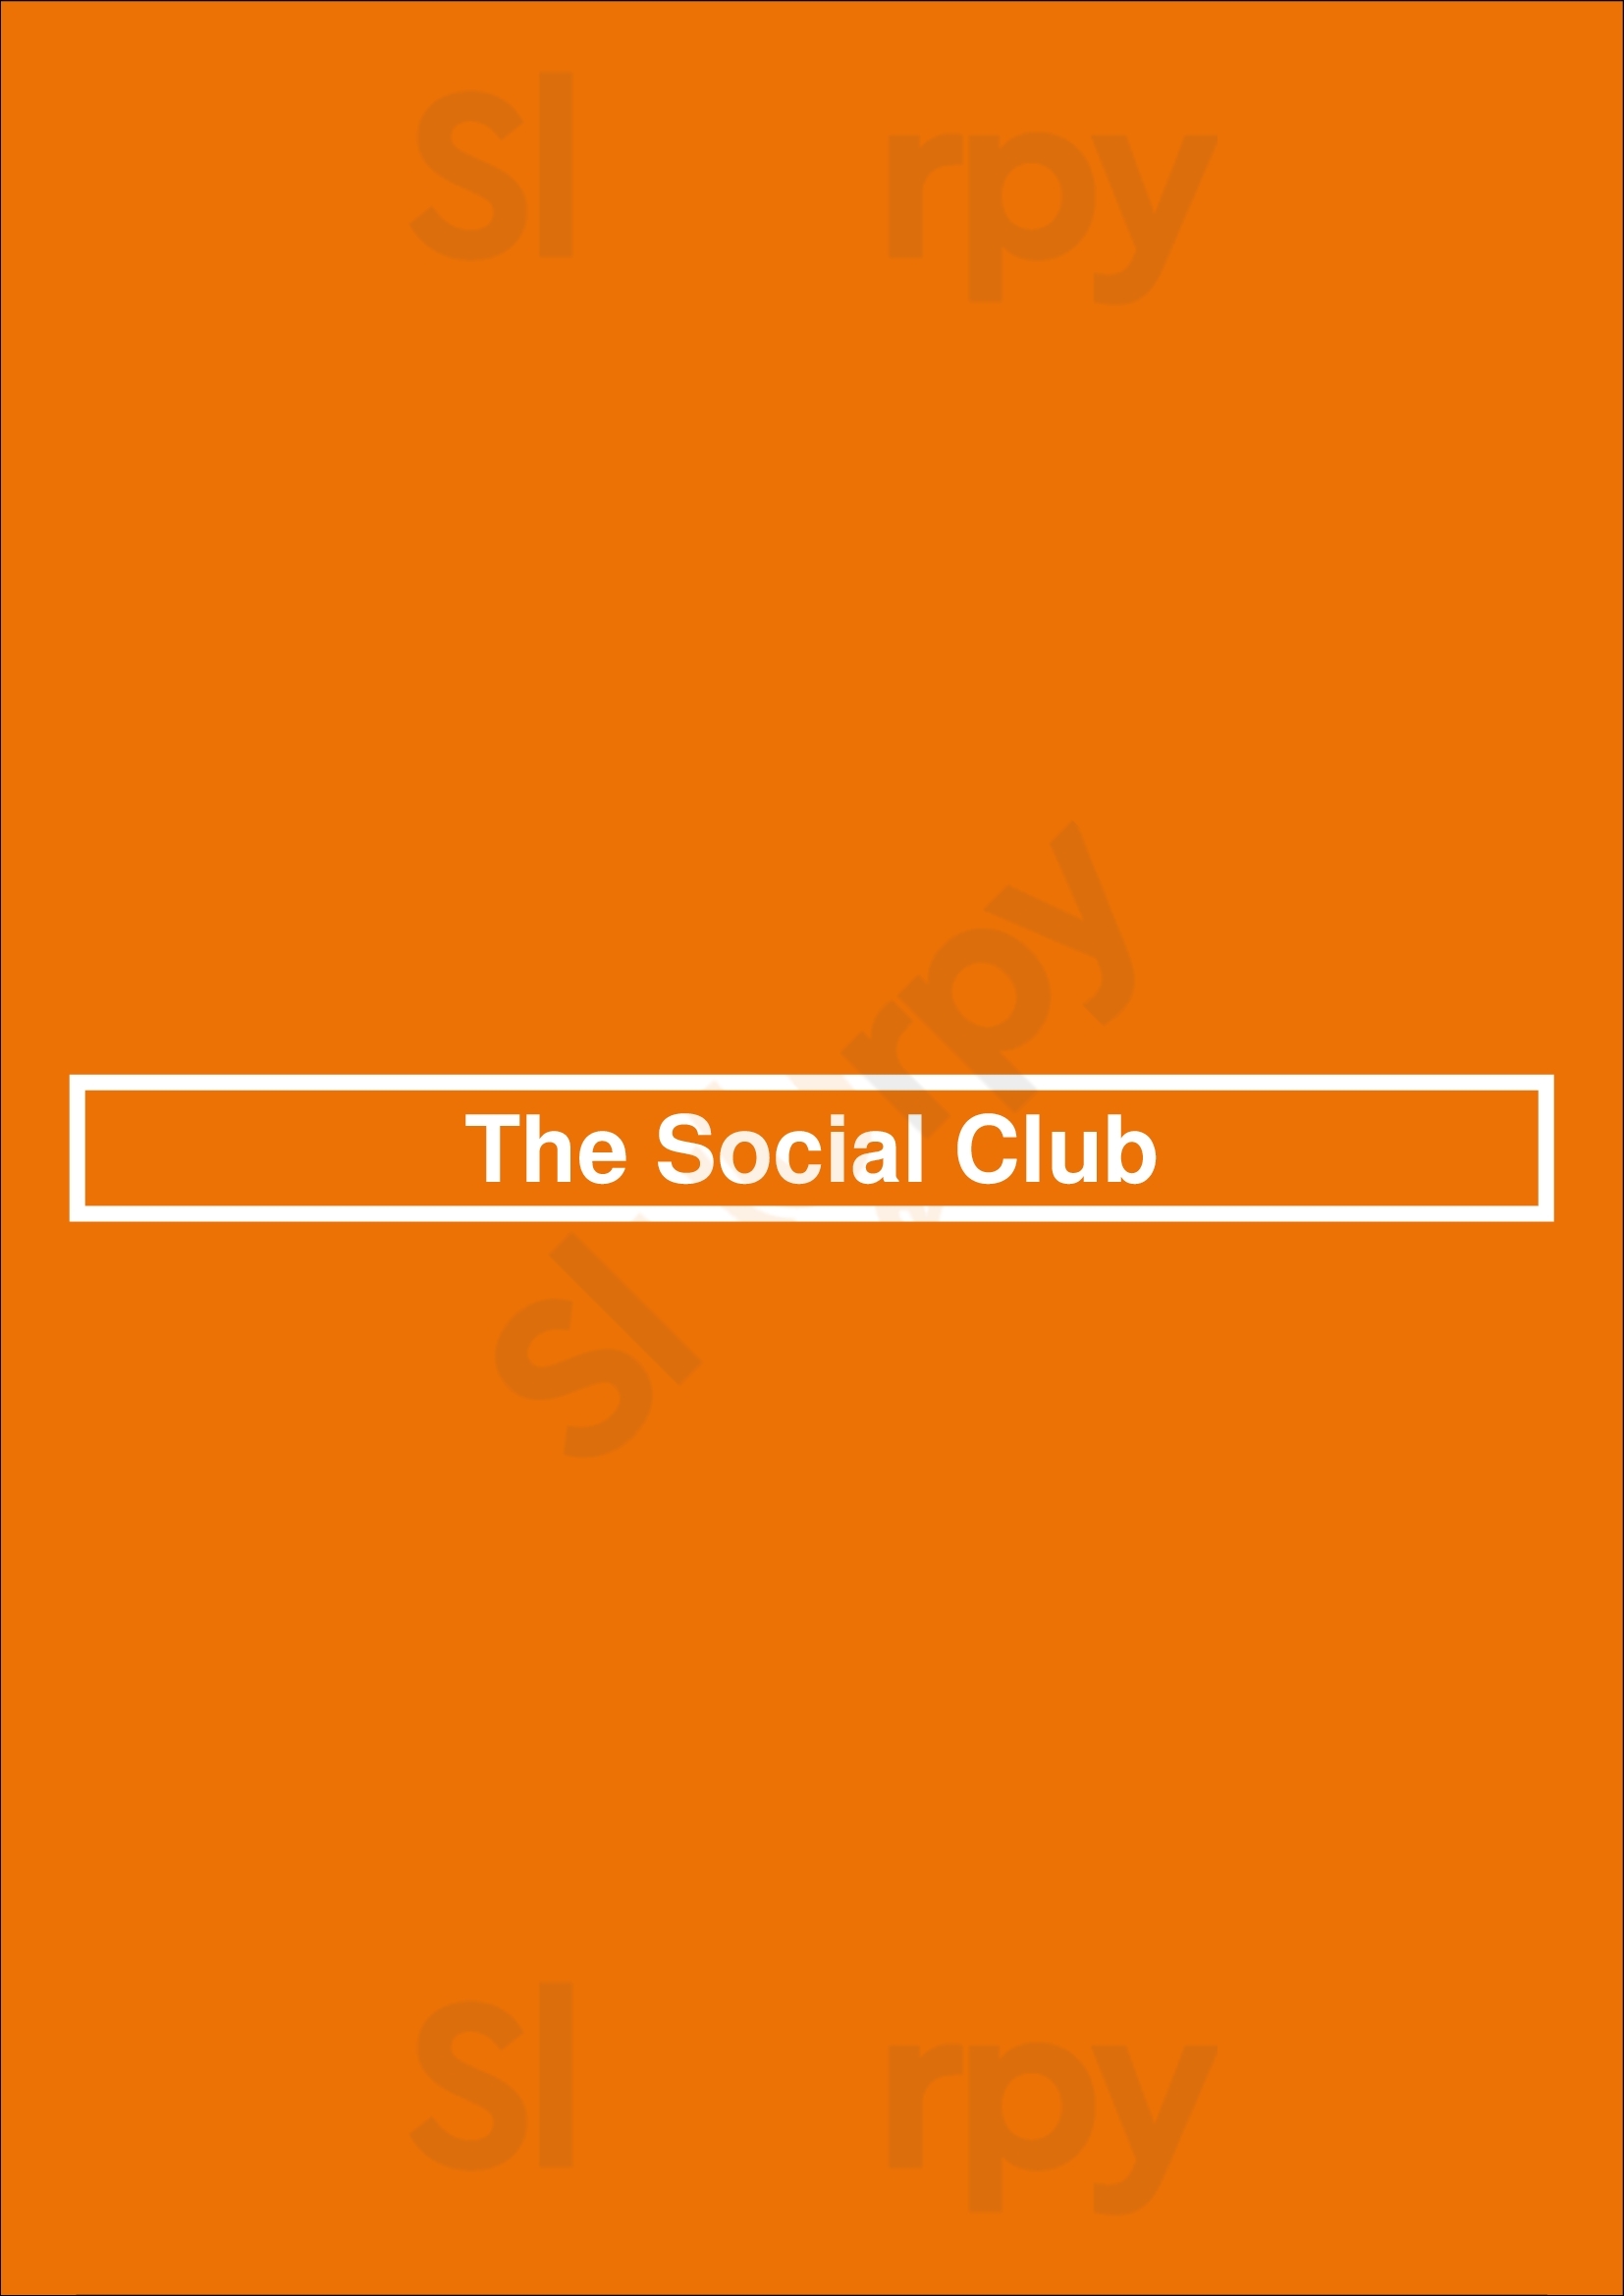 The Social Club Rotterdam Menu - 1